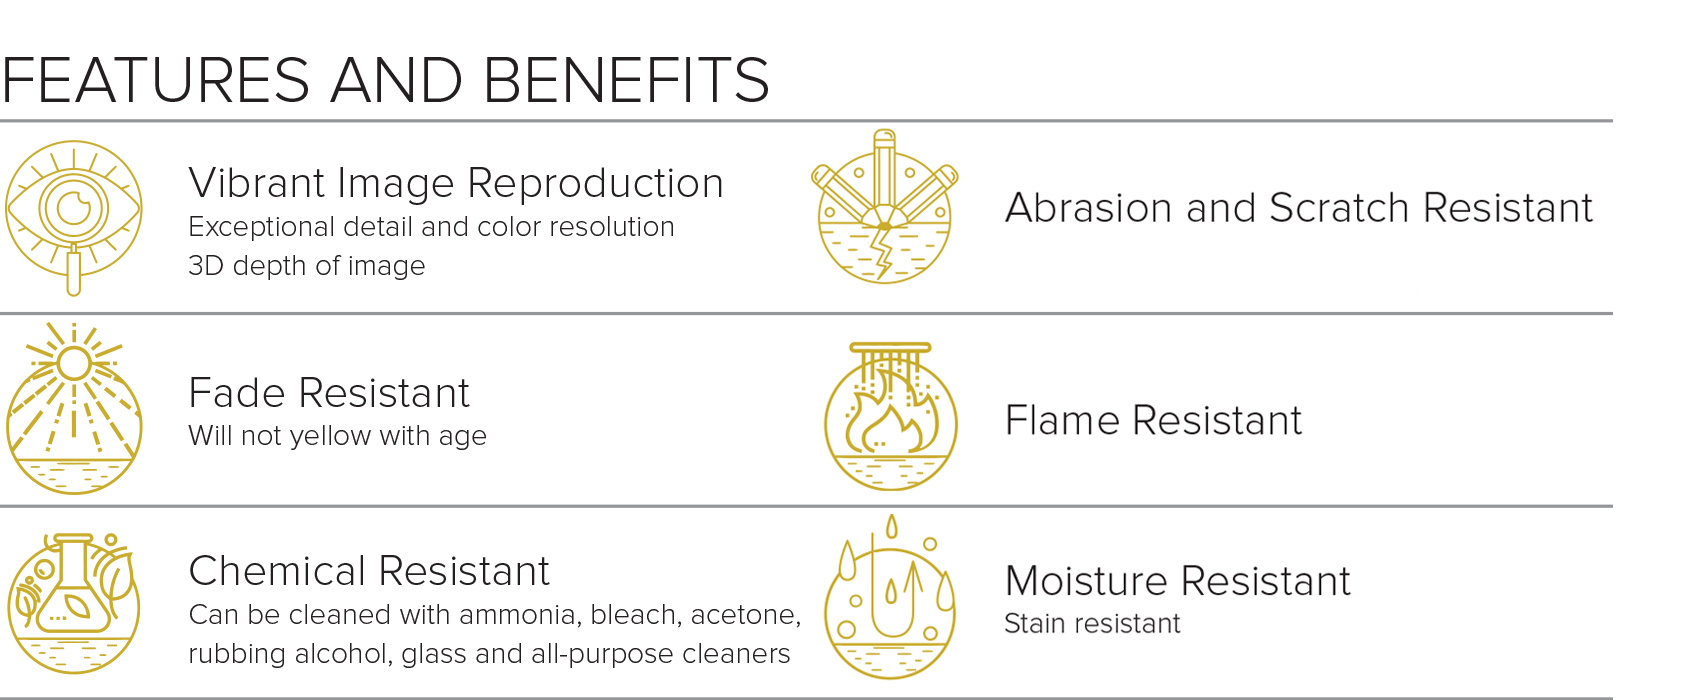 Dye Sublimation Process Benefits